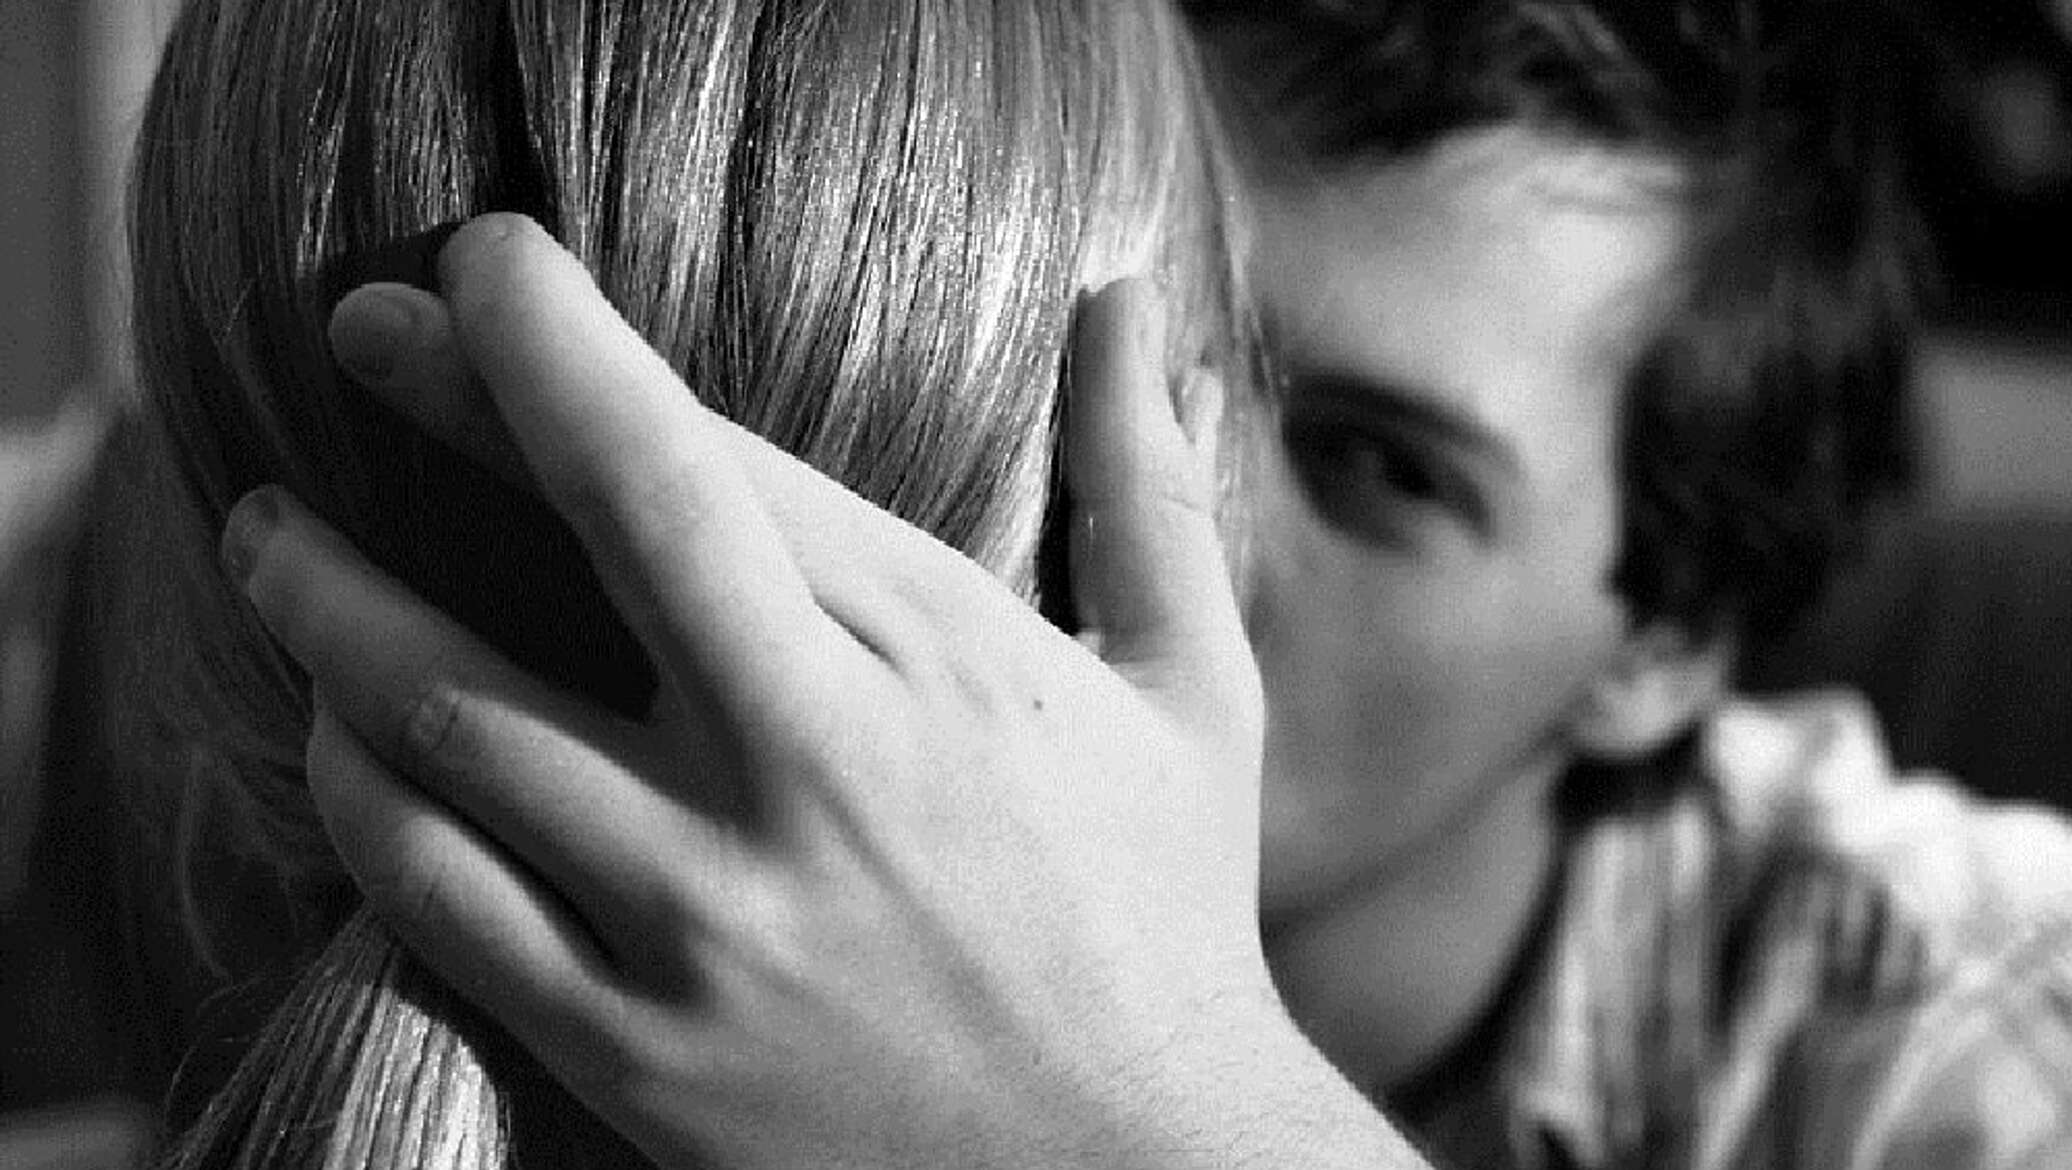 Мужчина любит пальцем. Поцелуй руки девушки. Поцелуй рука в волосах. Поцелуй руки девушки фото. Поглаживание волос.